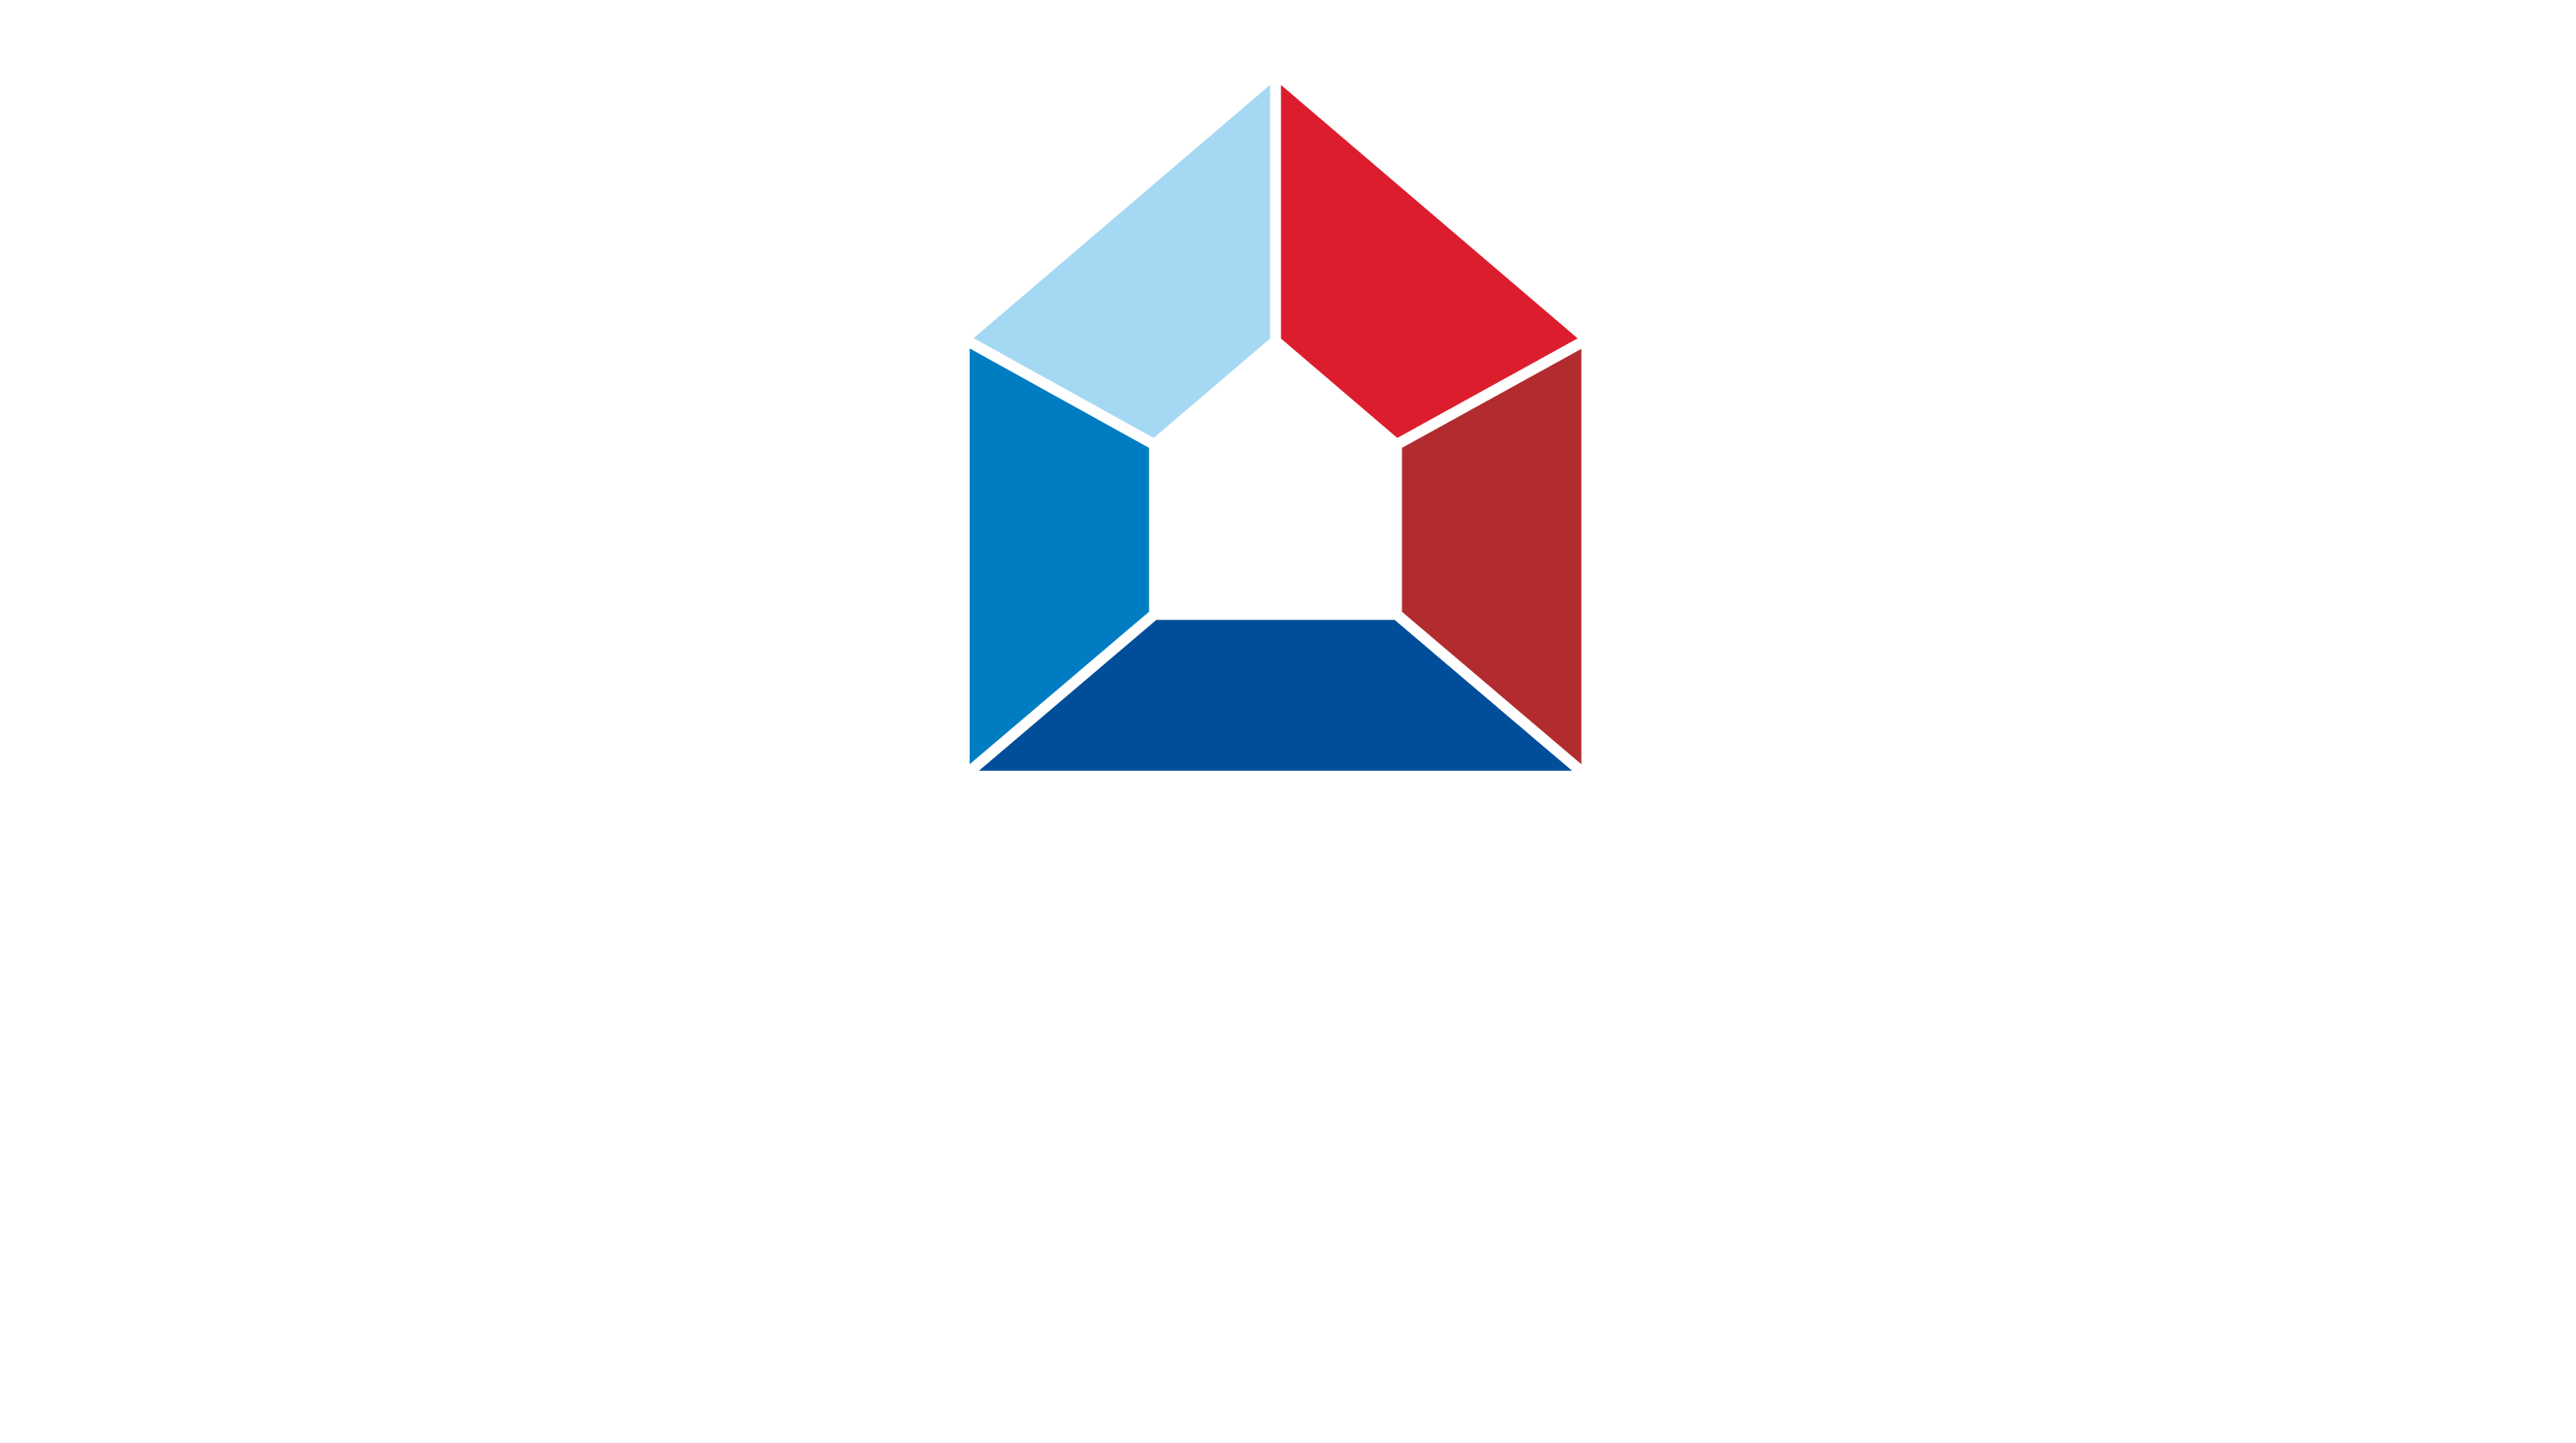 Jennings Real Estate Team